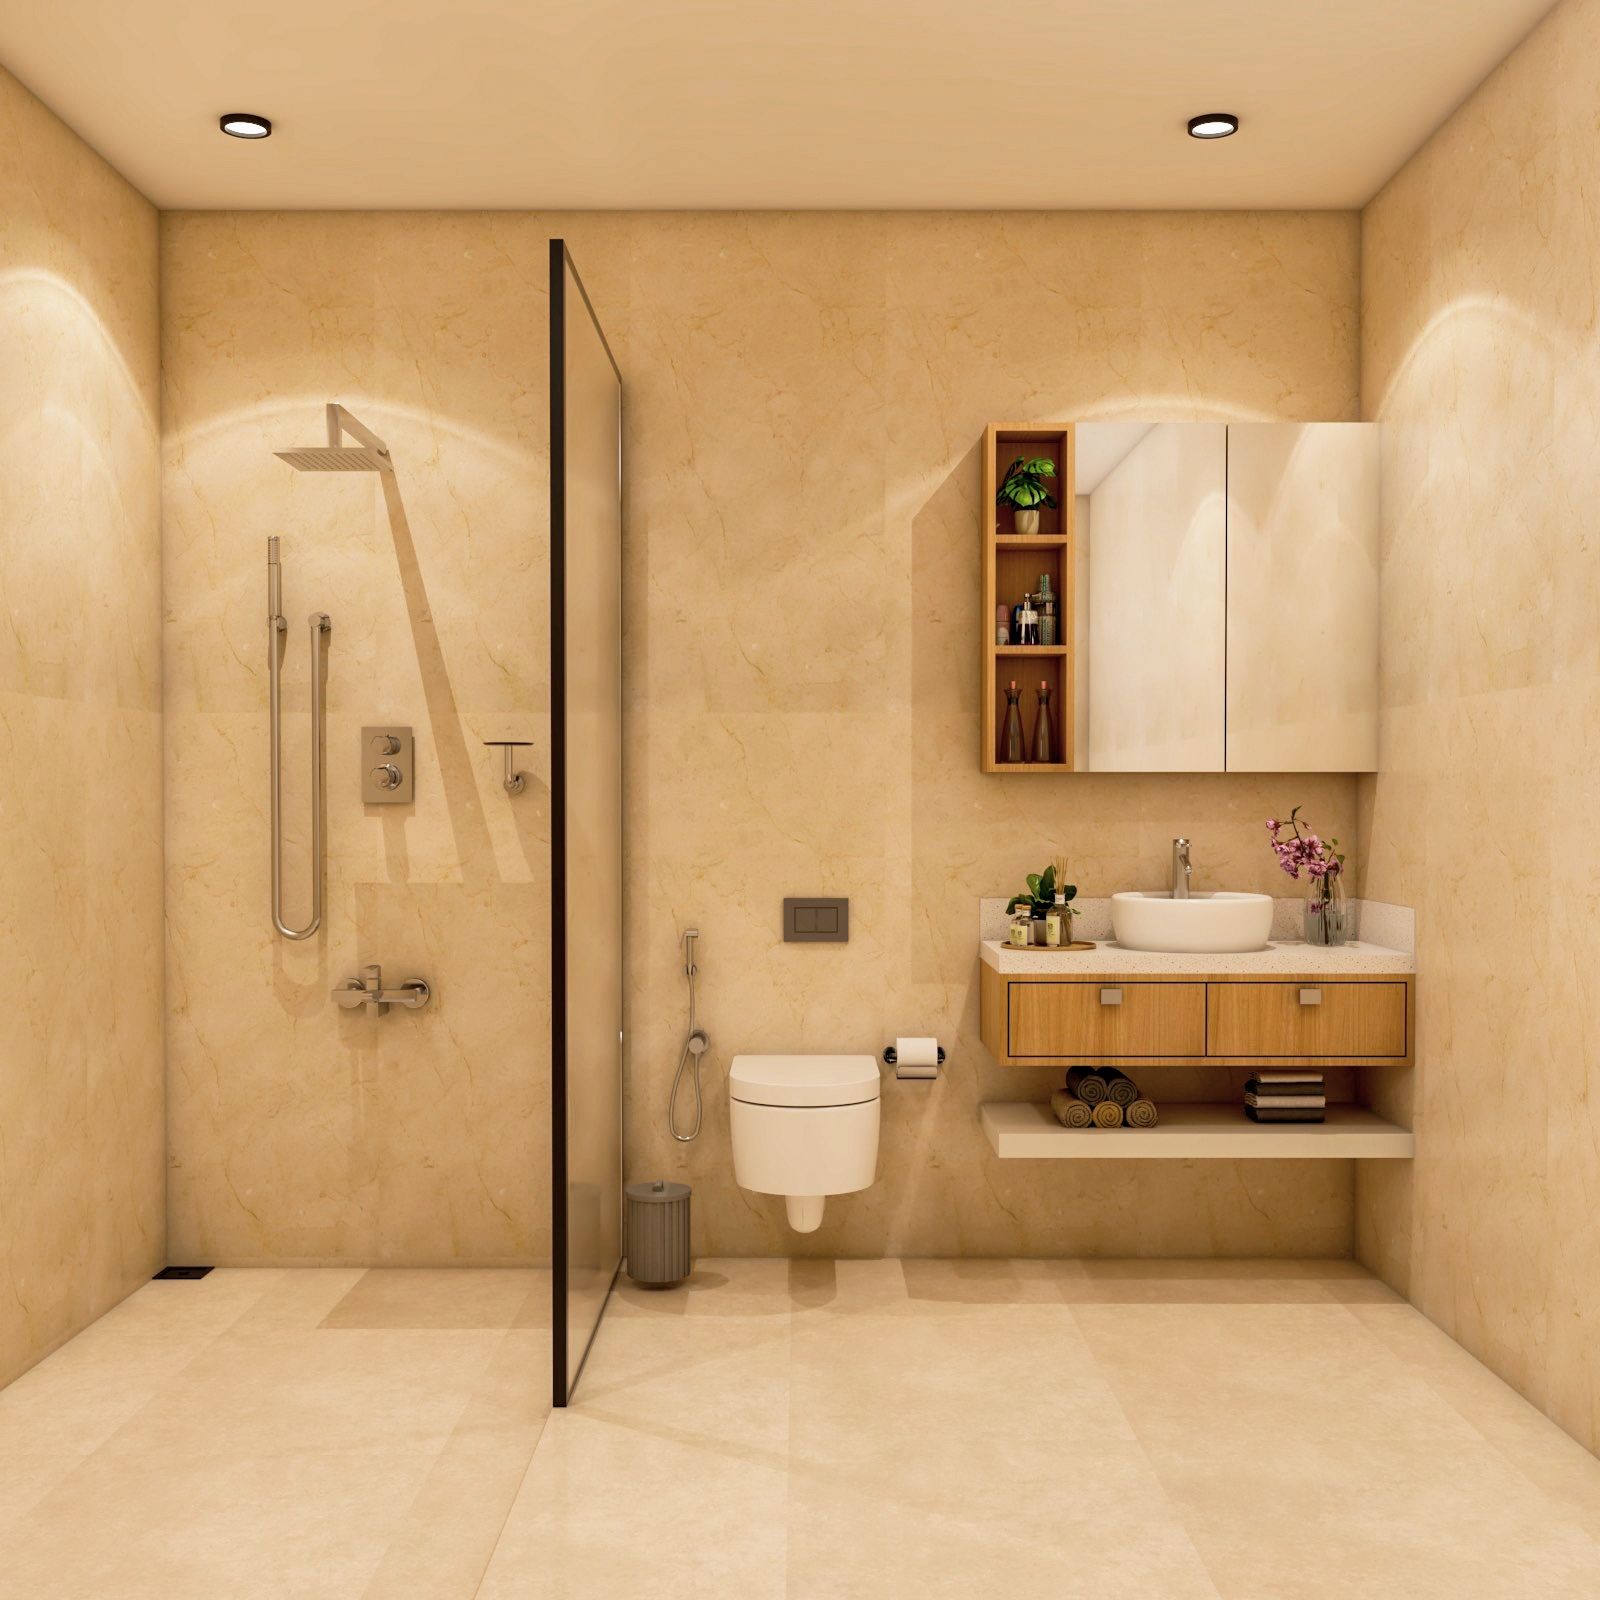 Modern Bathroom Design With Beige Wall And Floor Tiles